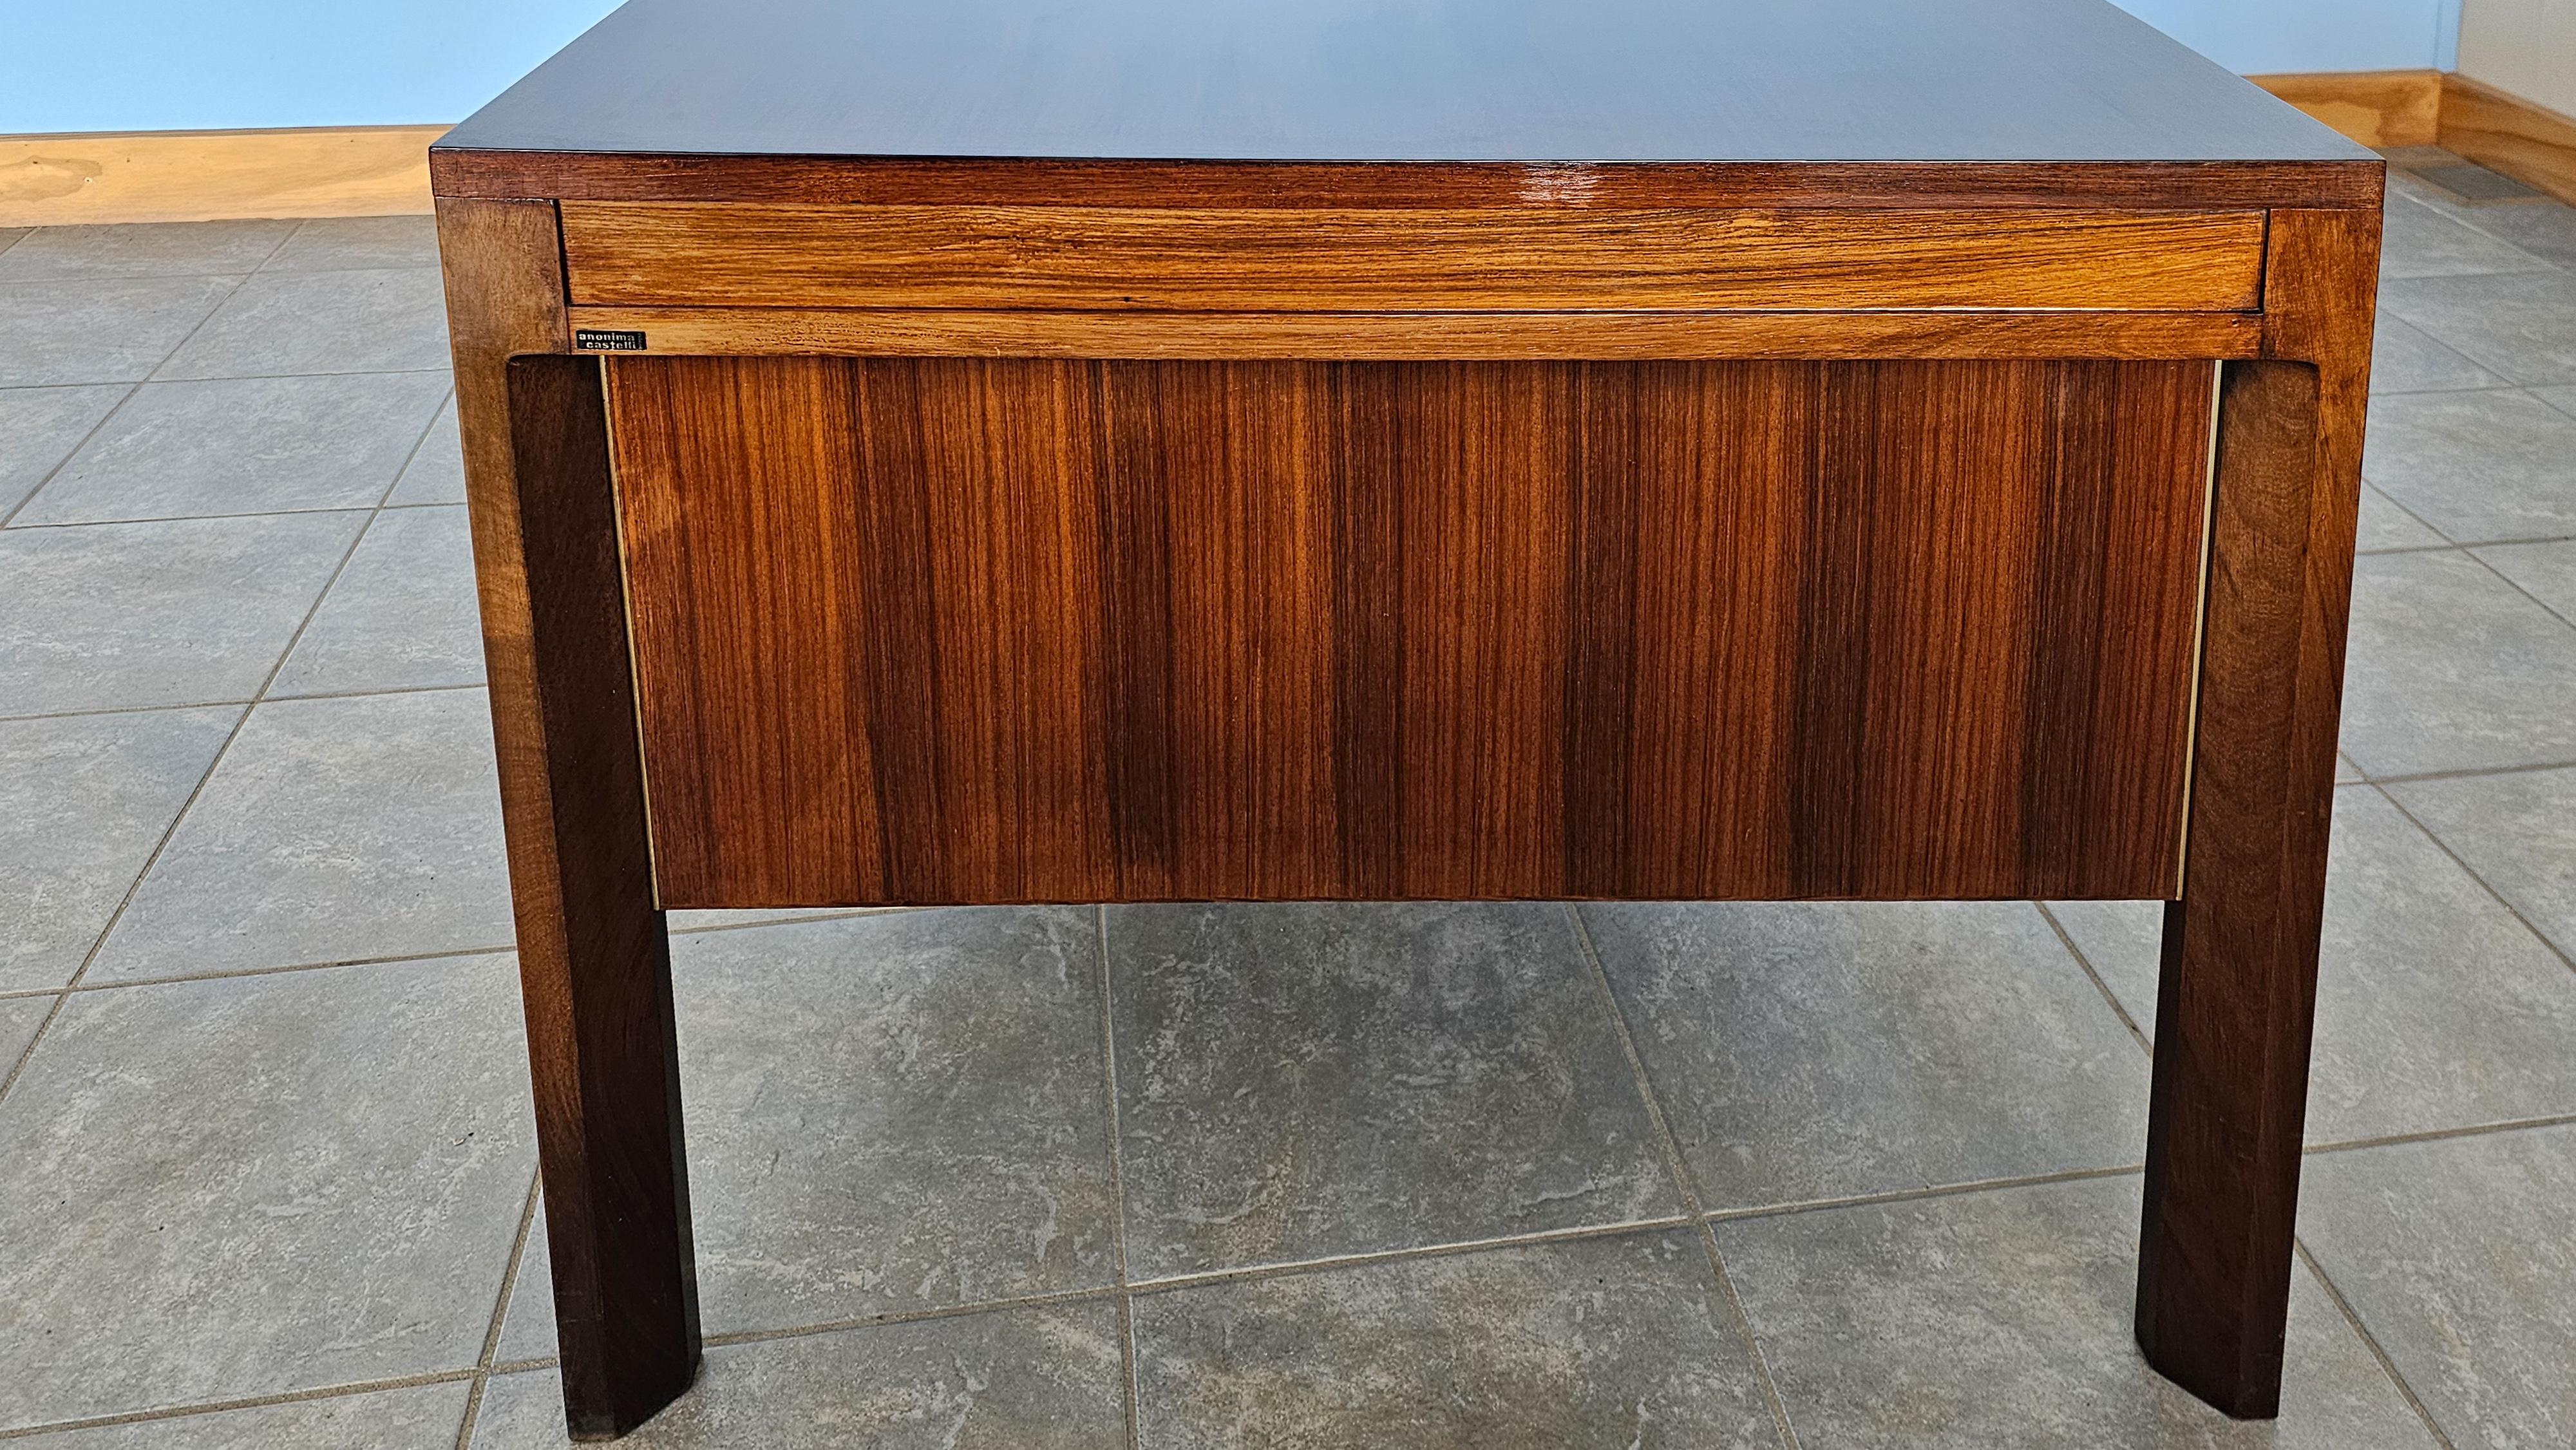 Anonima Castelli Palisander Wood Desk with Elegant Metal Insert Handle, 1970s For Sale 10